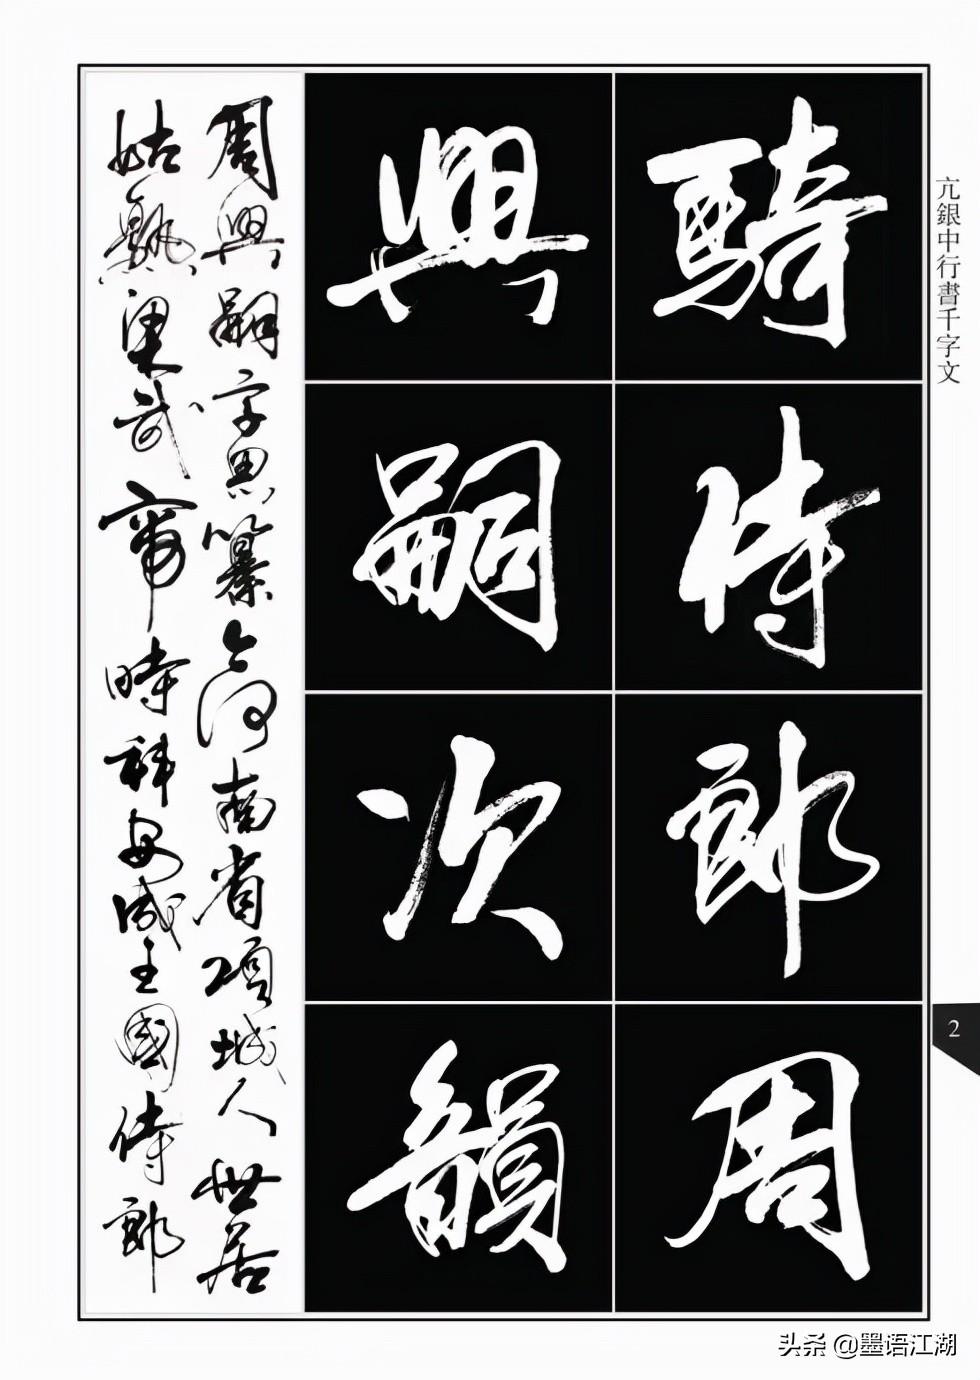 Thousand-Character Running Script, the most beautiful running script in Kangyin